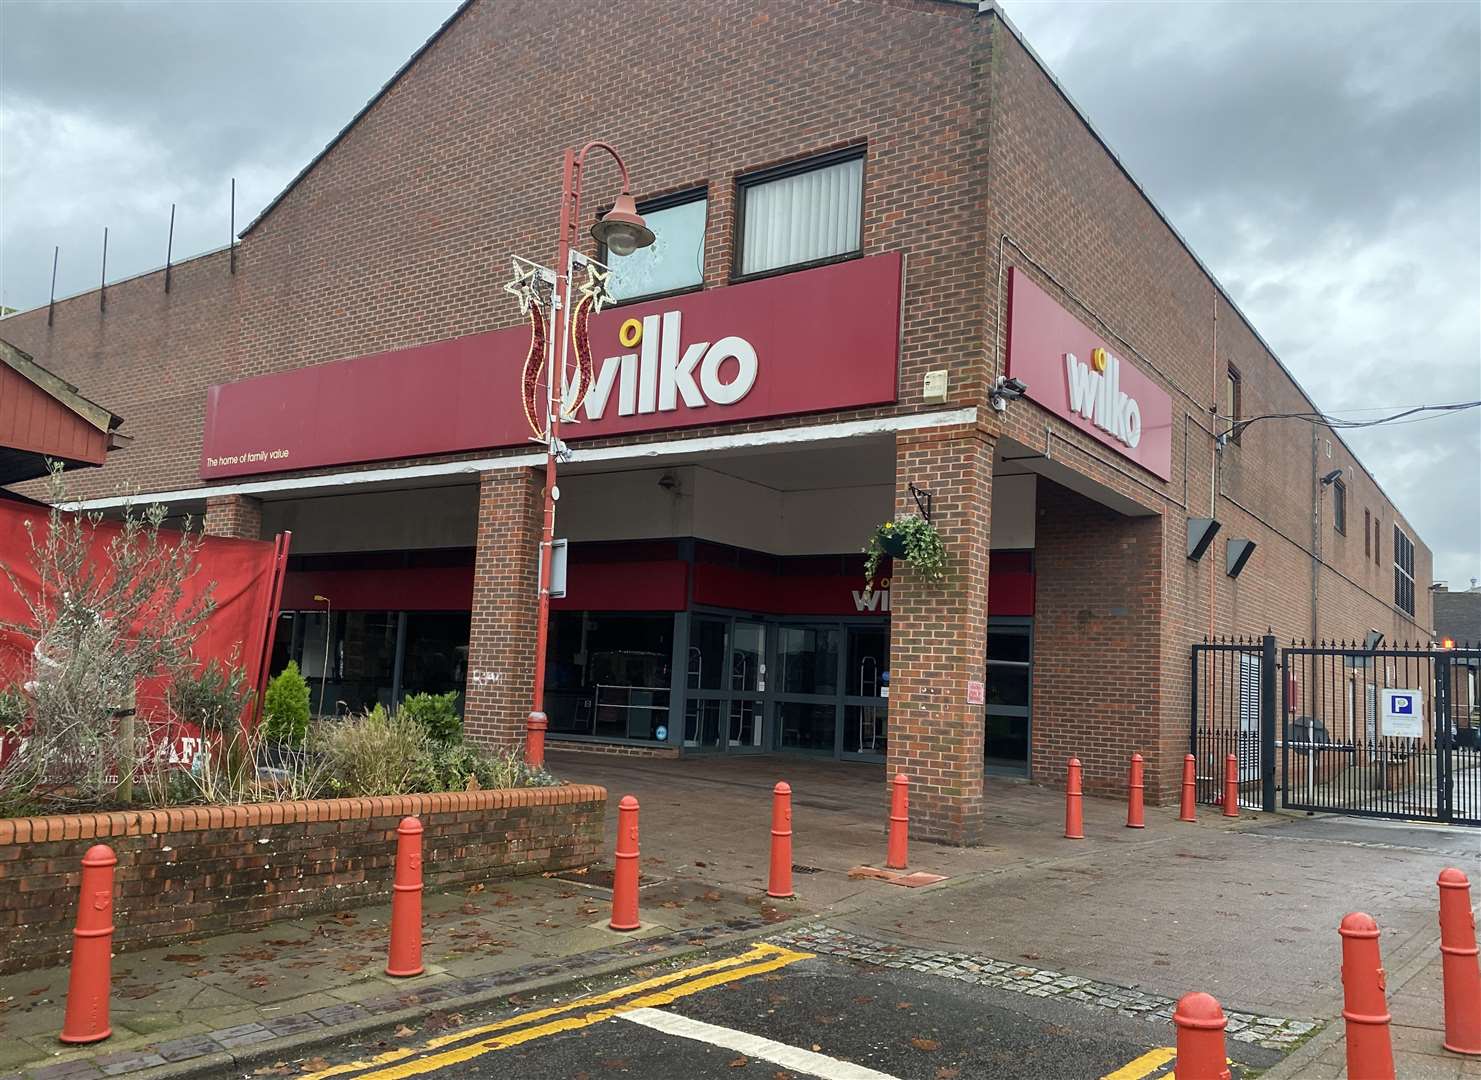 The Wilko closed in September